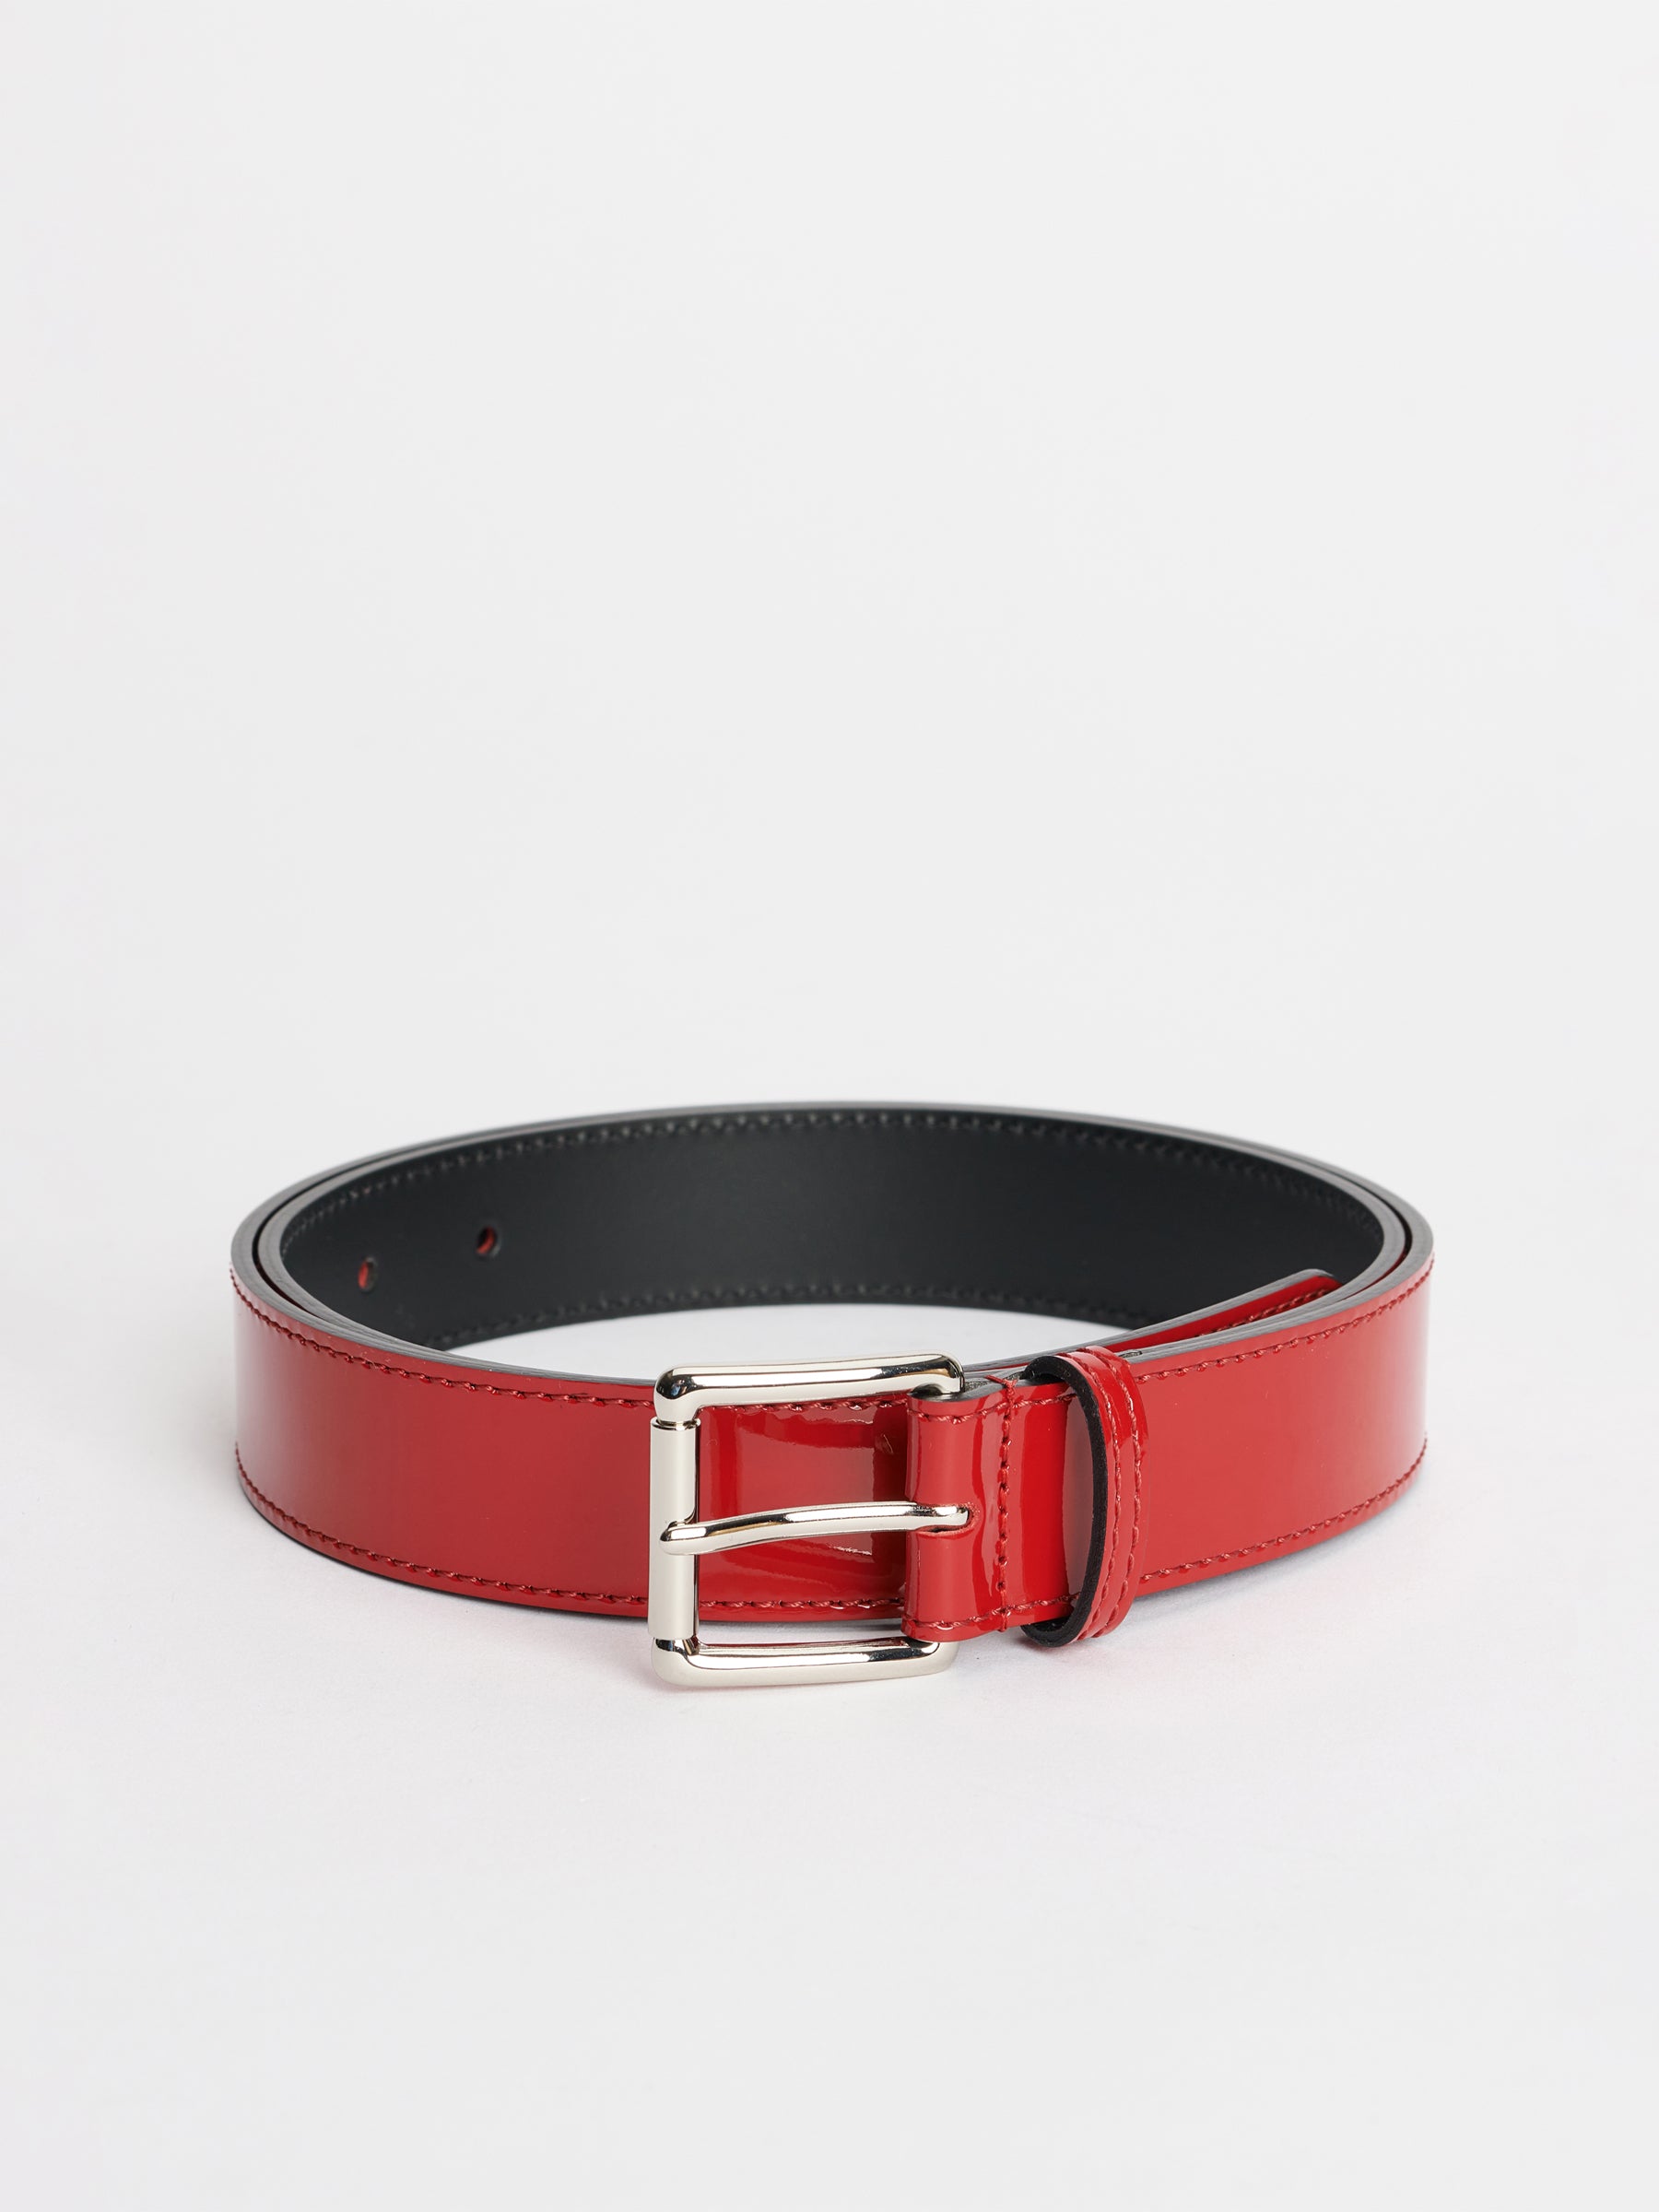 TRÈS BIEN everywear Belt Lak Red